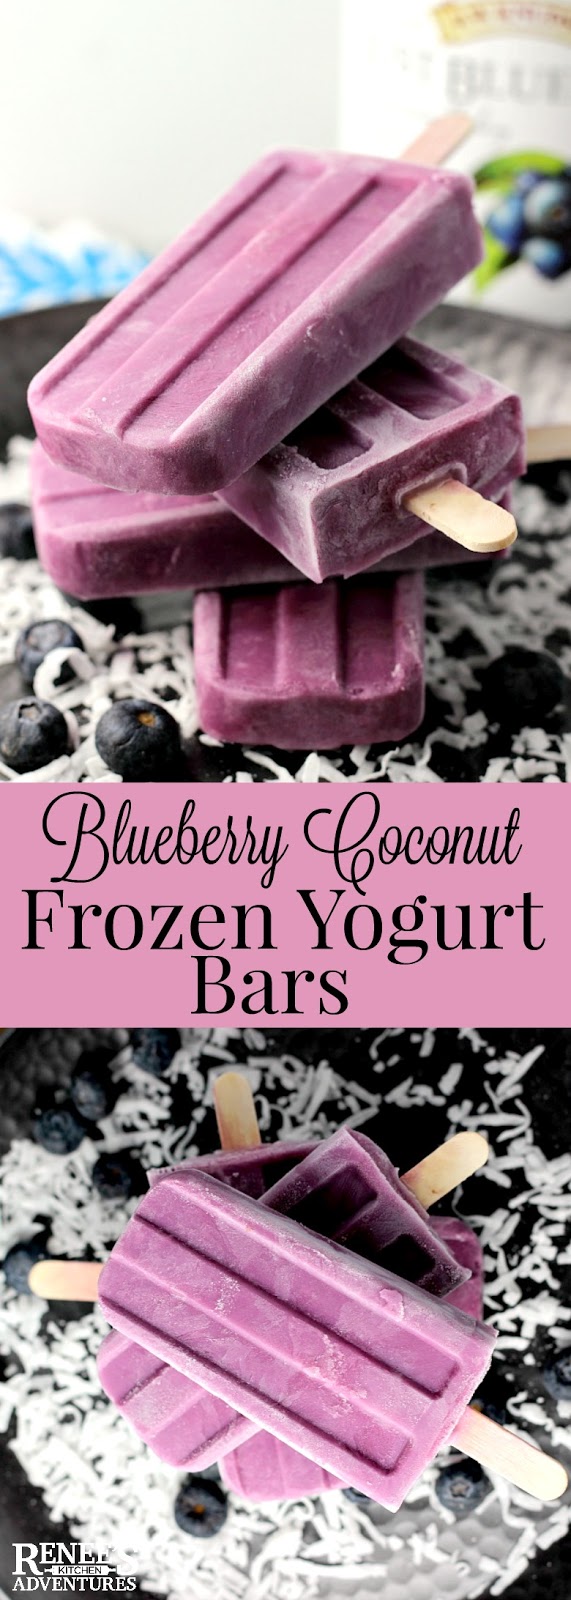 Blueberry Coconut Frozen Yogurt Bars | Renee's Kitchen Adventures - Easy recipe for homemade frozen yogurt bars made with blueberry juice and Greek yogurt. 